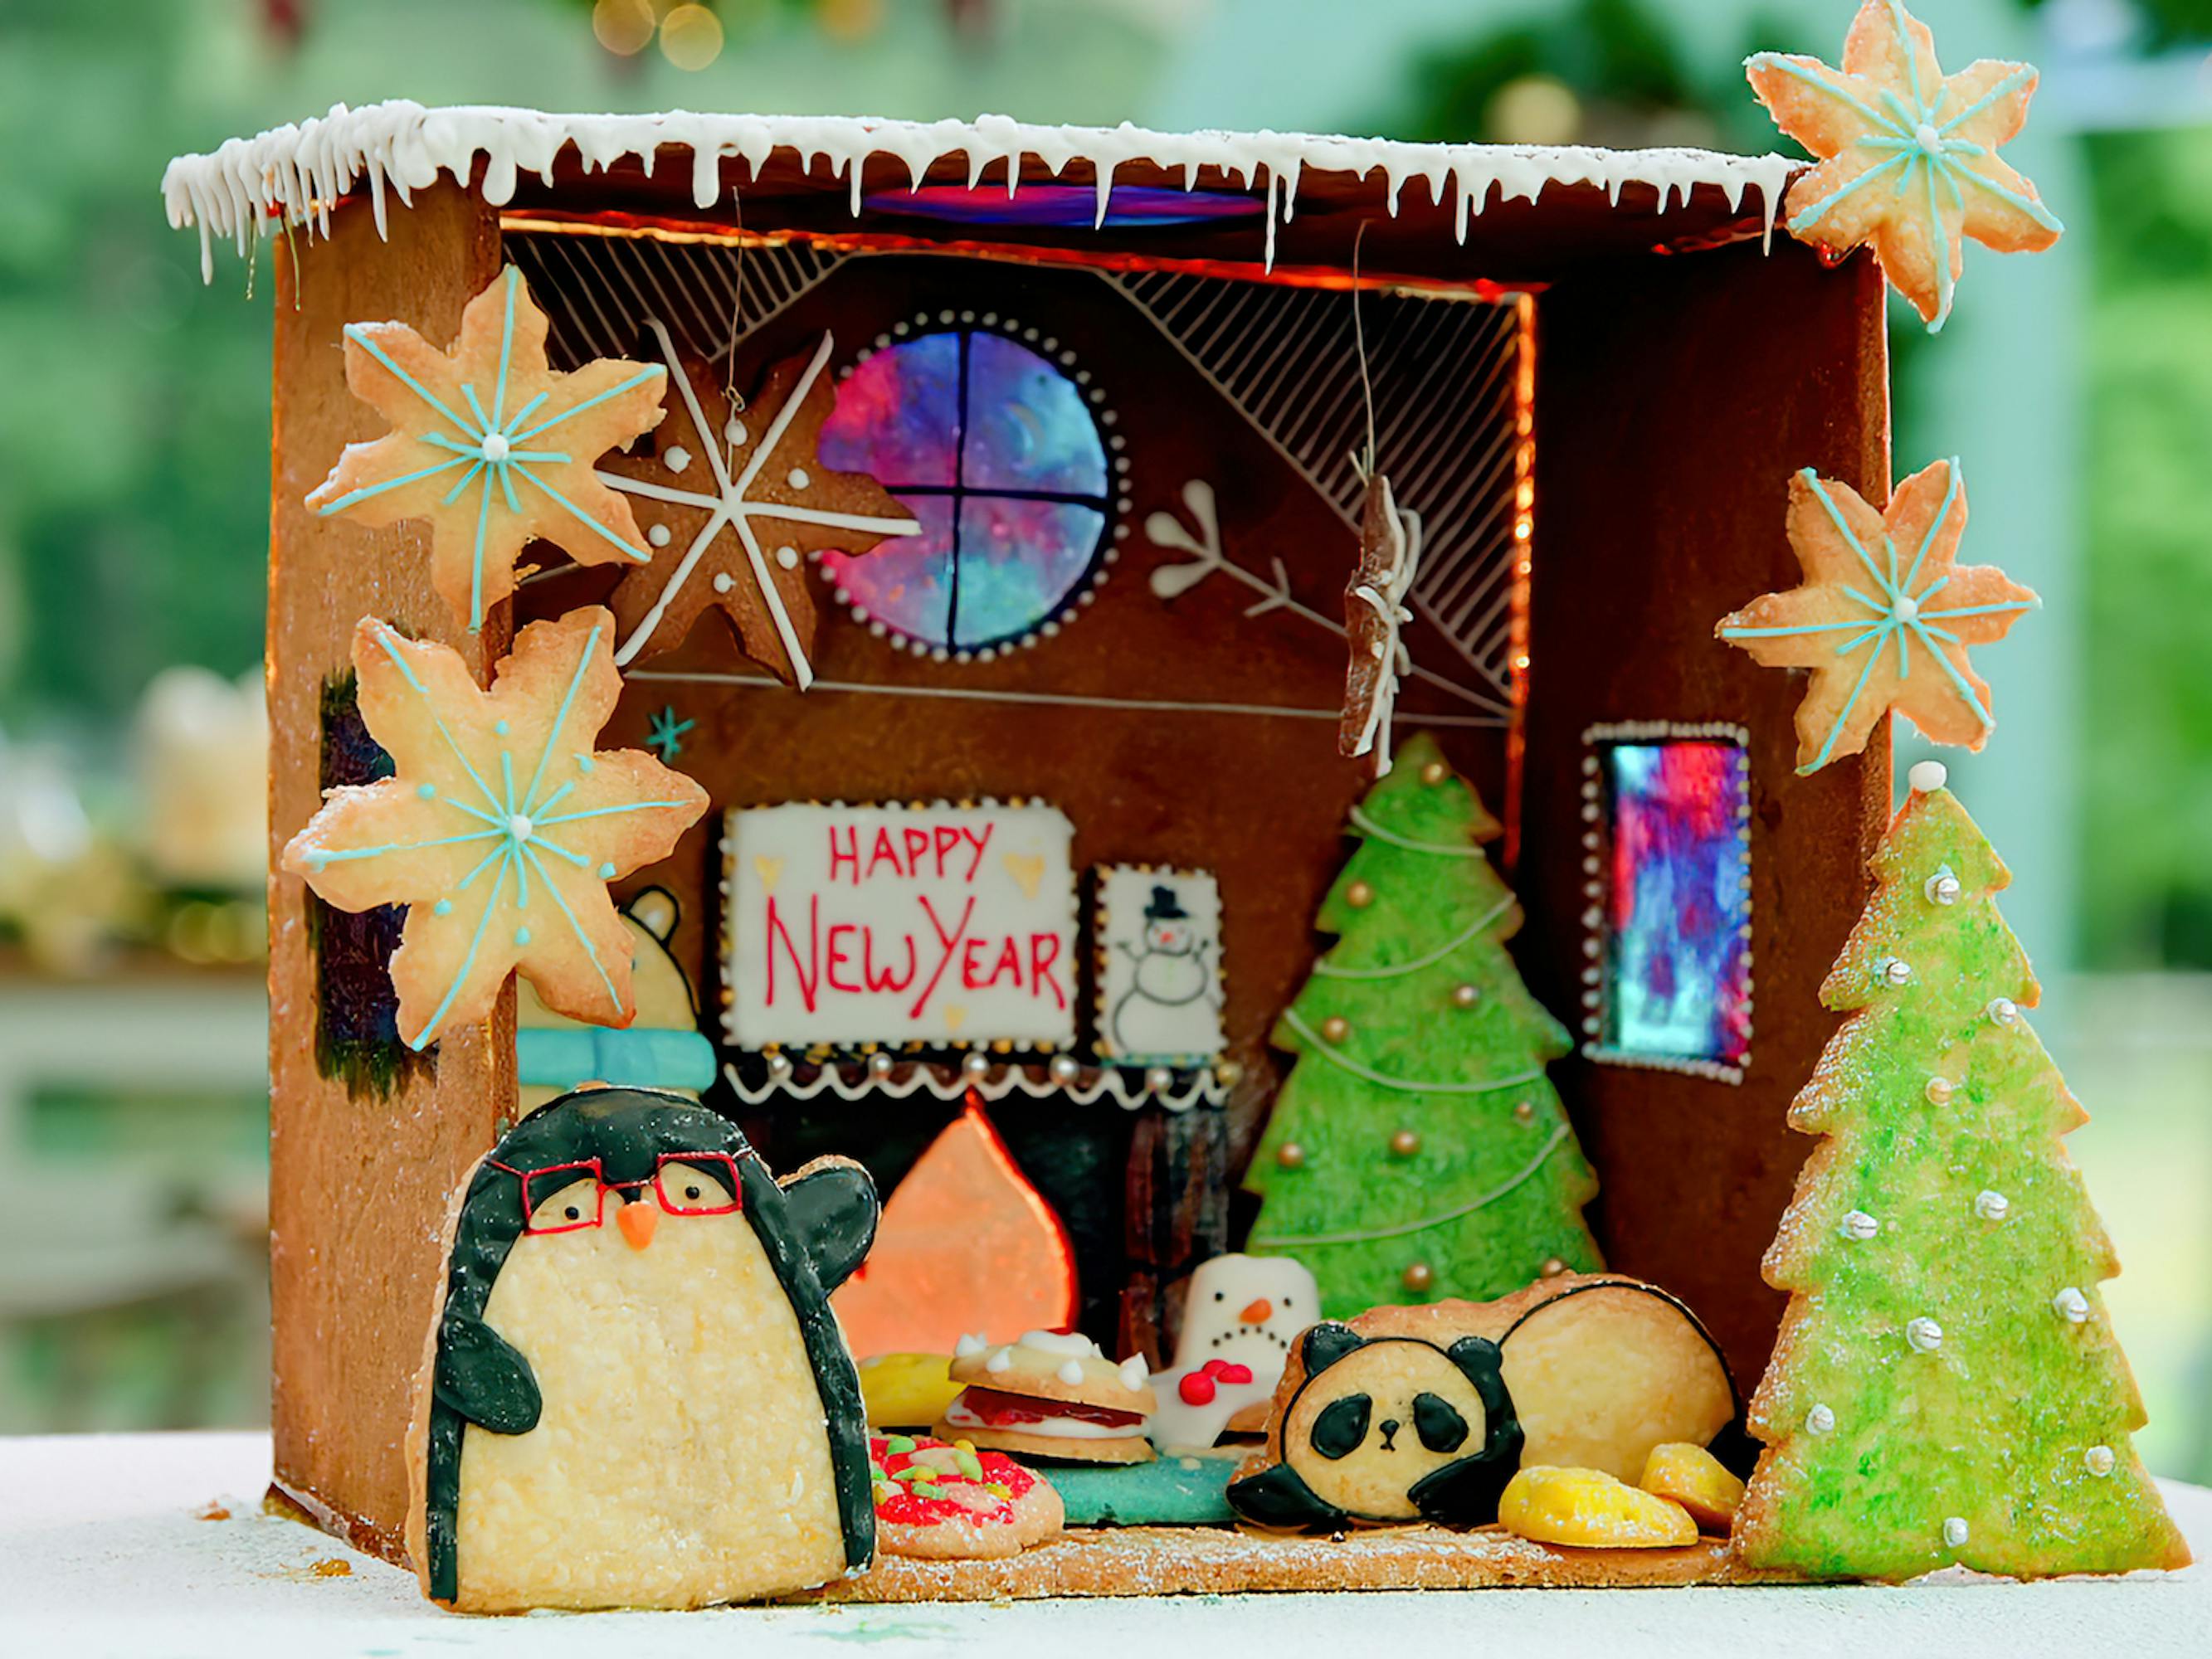 A Christmas diarama with sugary looking snacks.